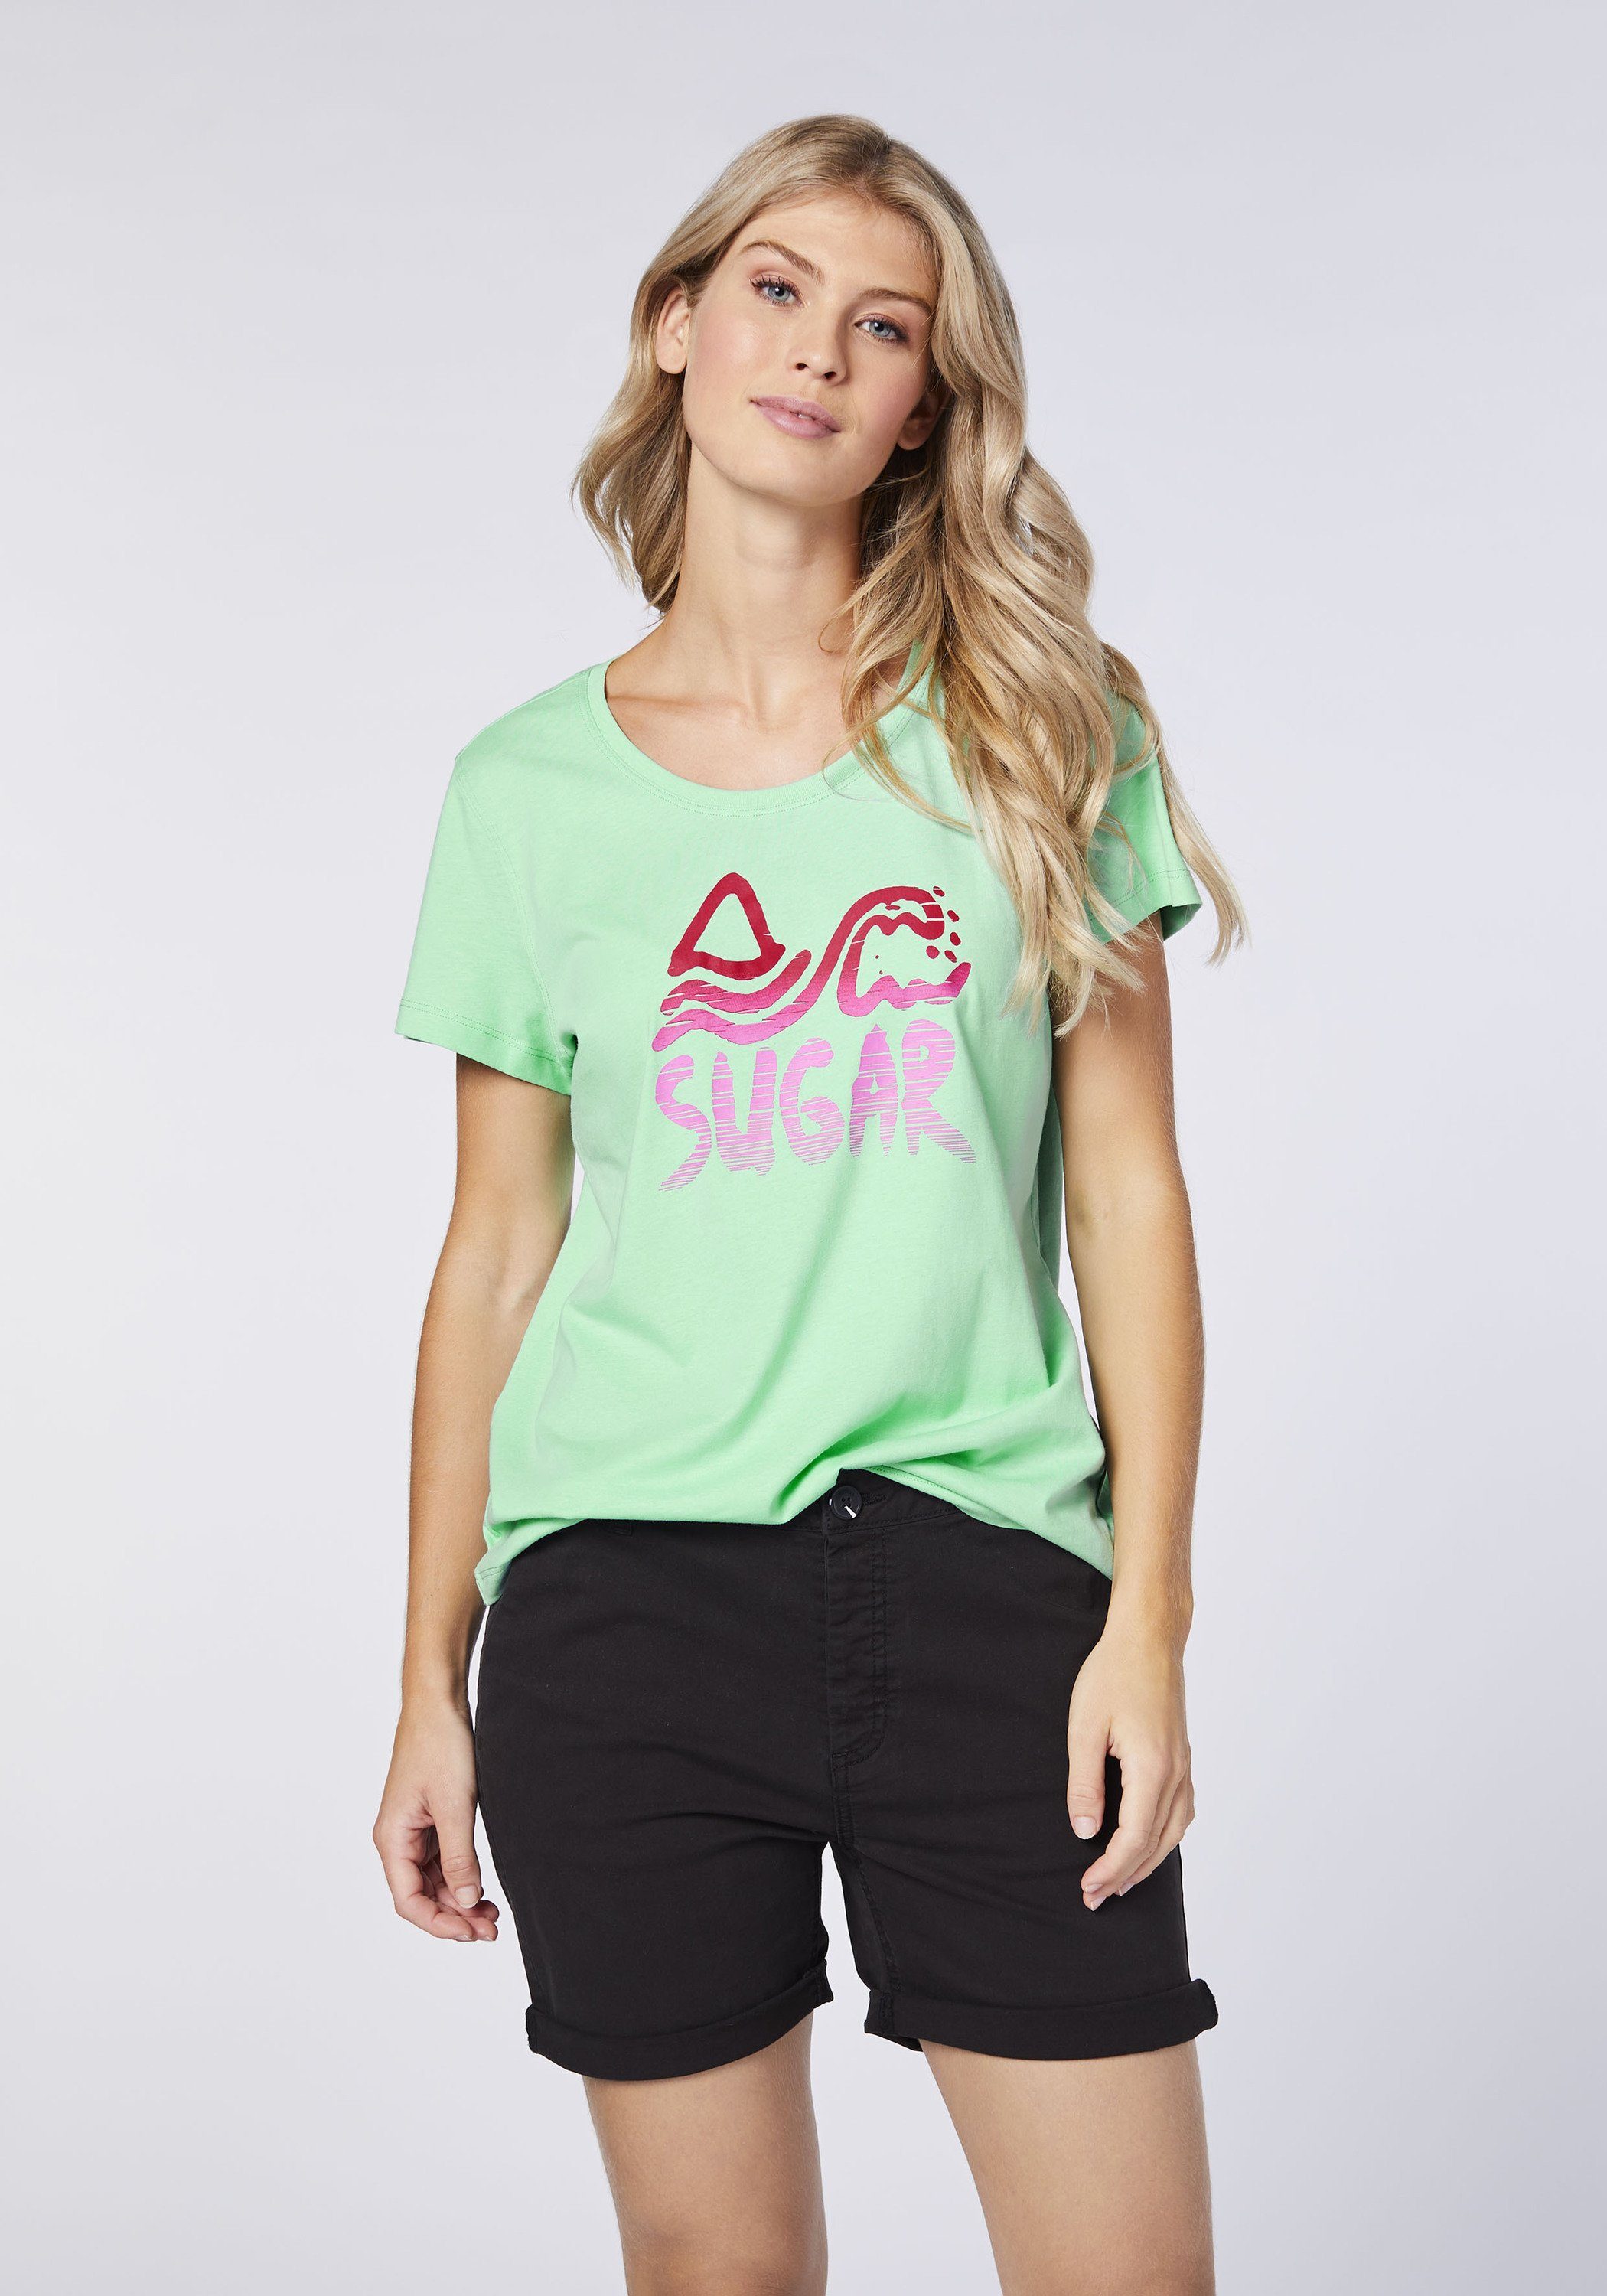 Chiemsee Print-Shirt Neptune mit 1 Frontprint Green farbenfrohem T-Shirt